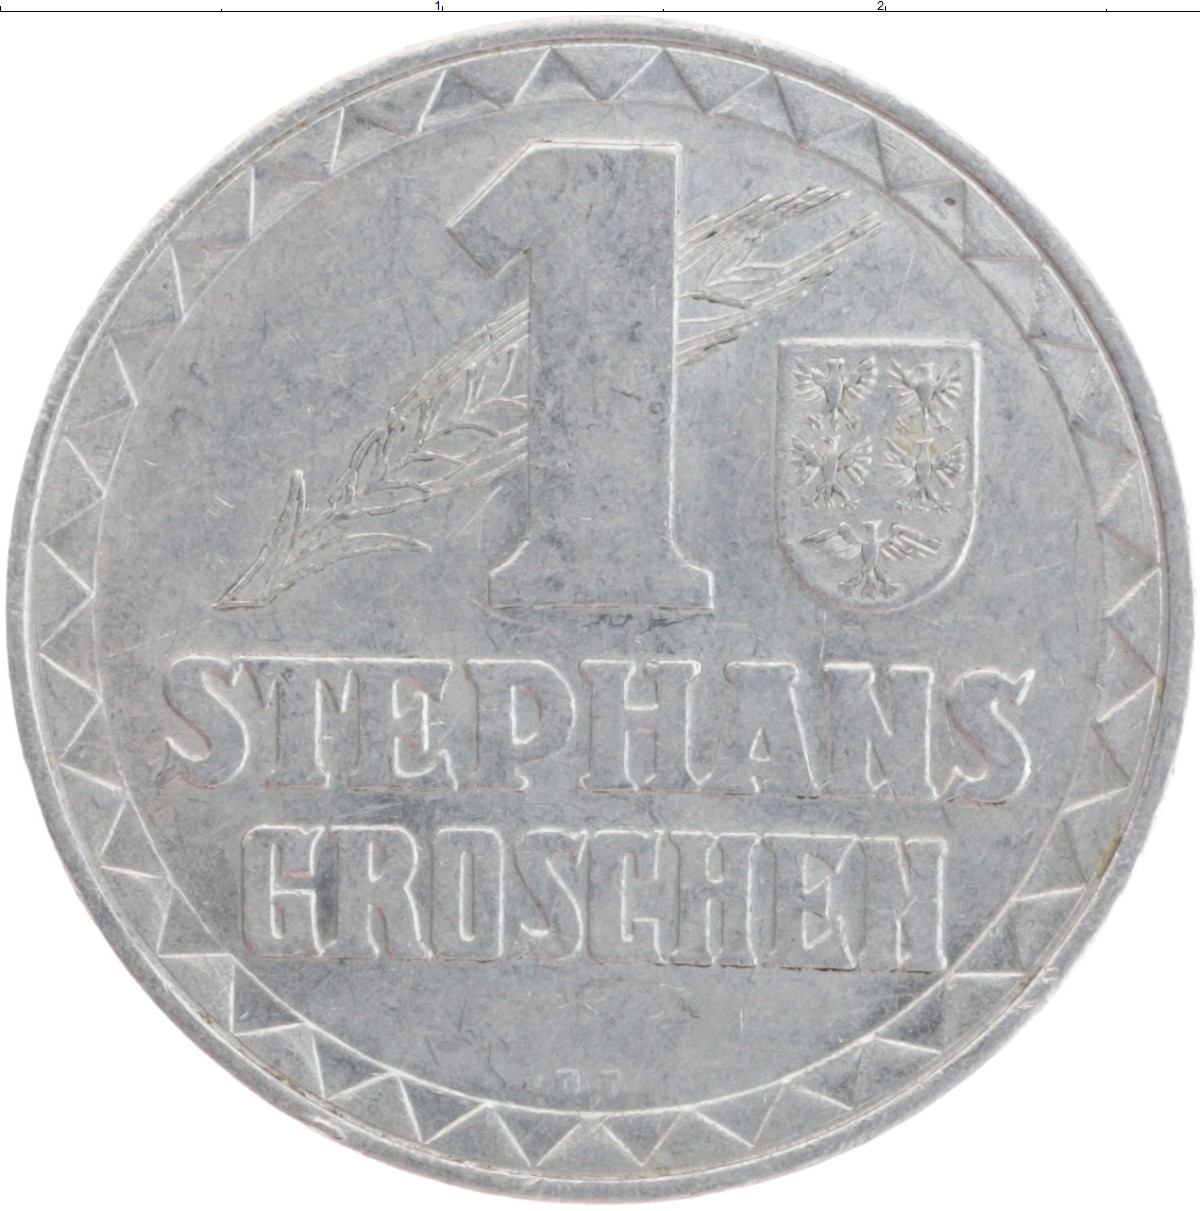 5 51 в рублях. Монета 1 грош Австрия. Австрийские монеты в Вене. 1 Грош Австрия 1947. 51 Рубль.